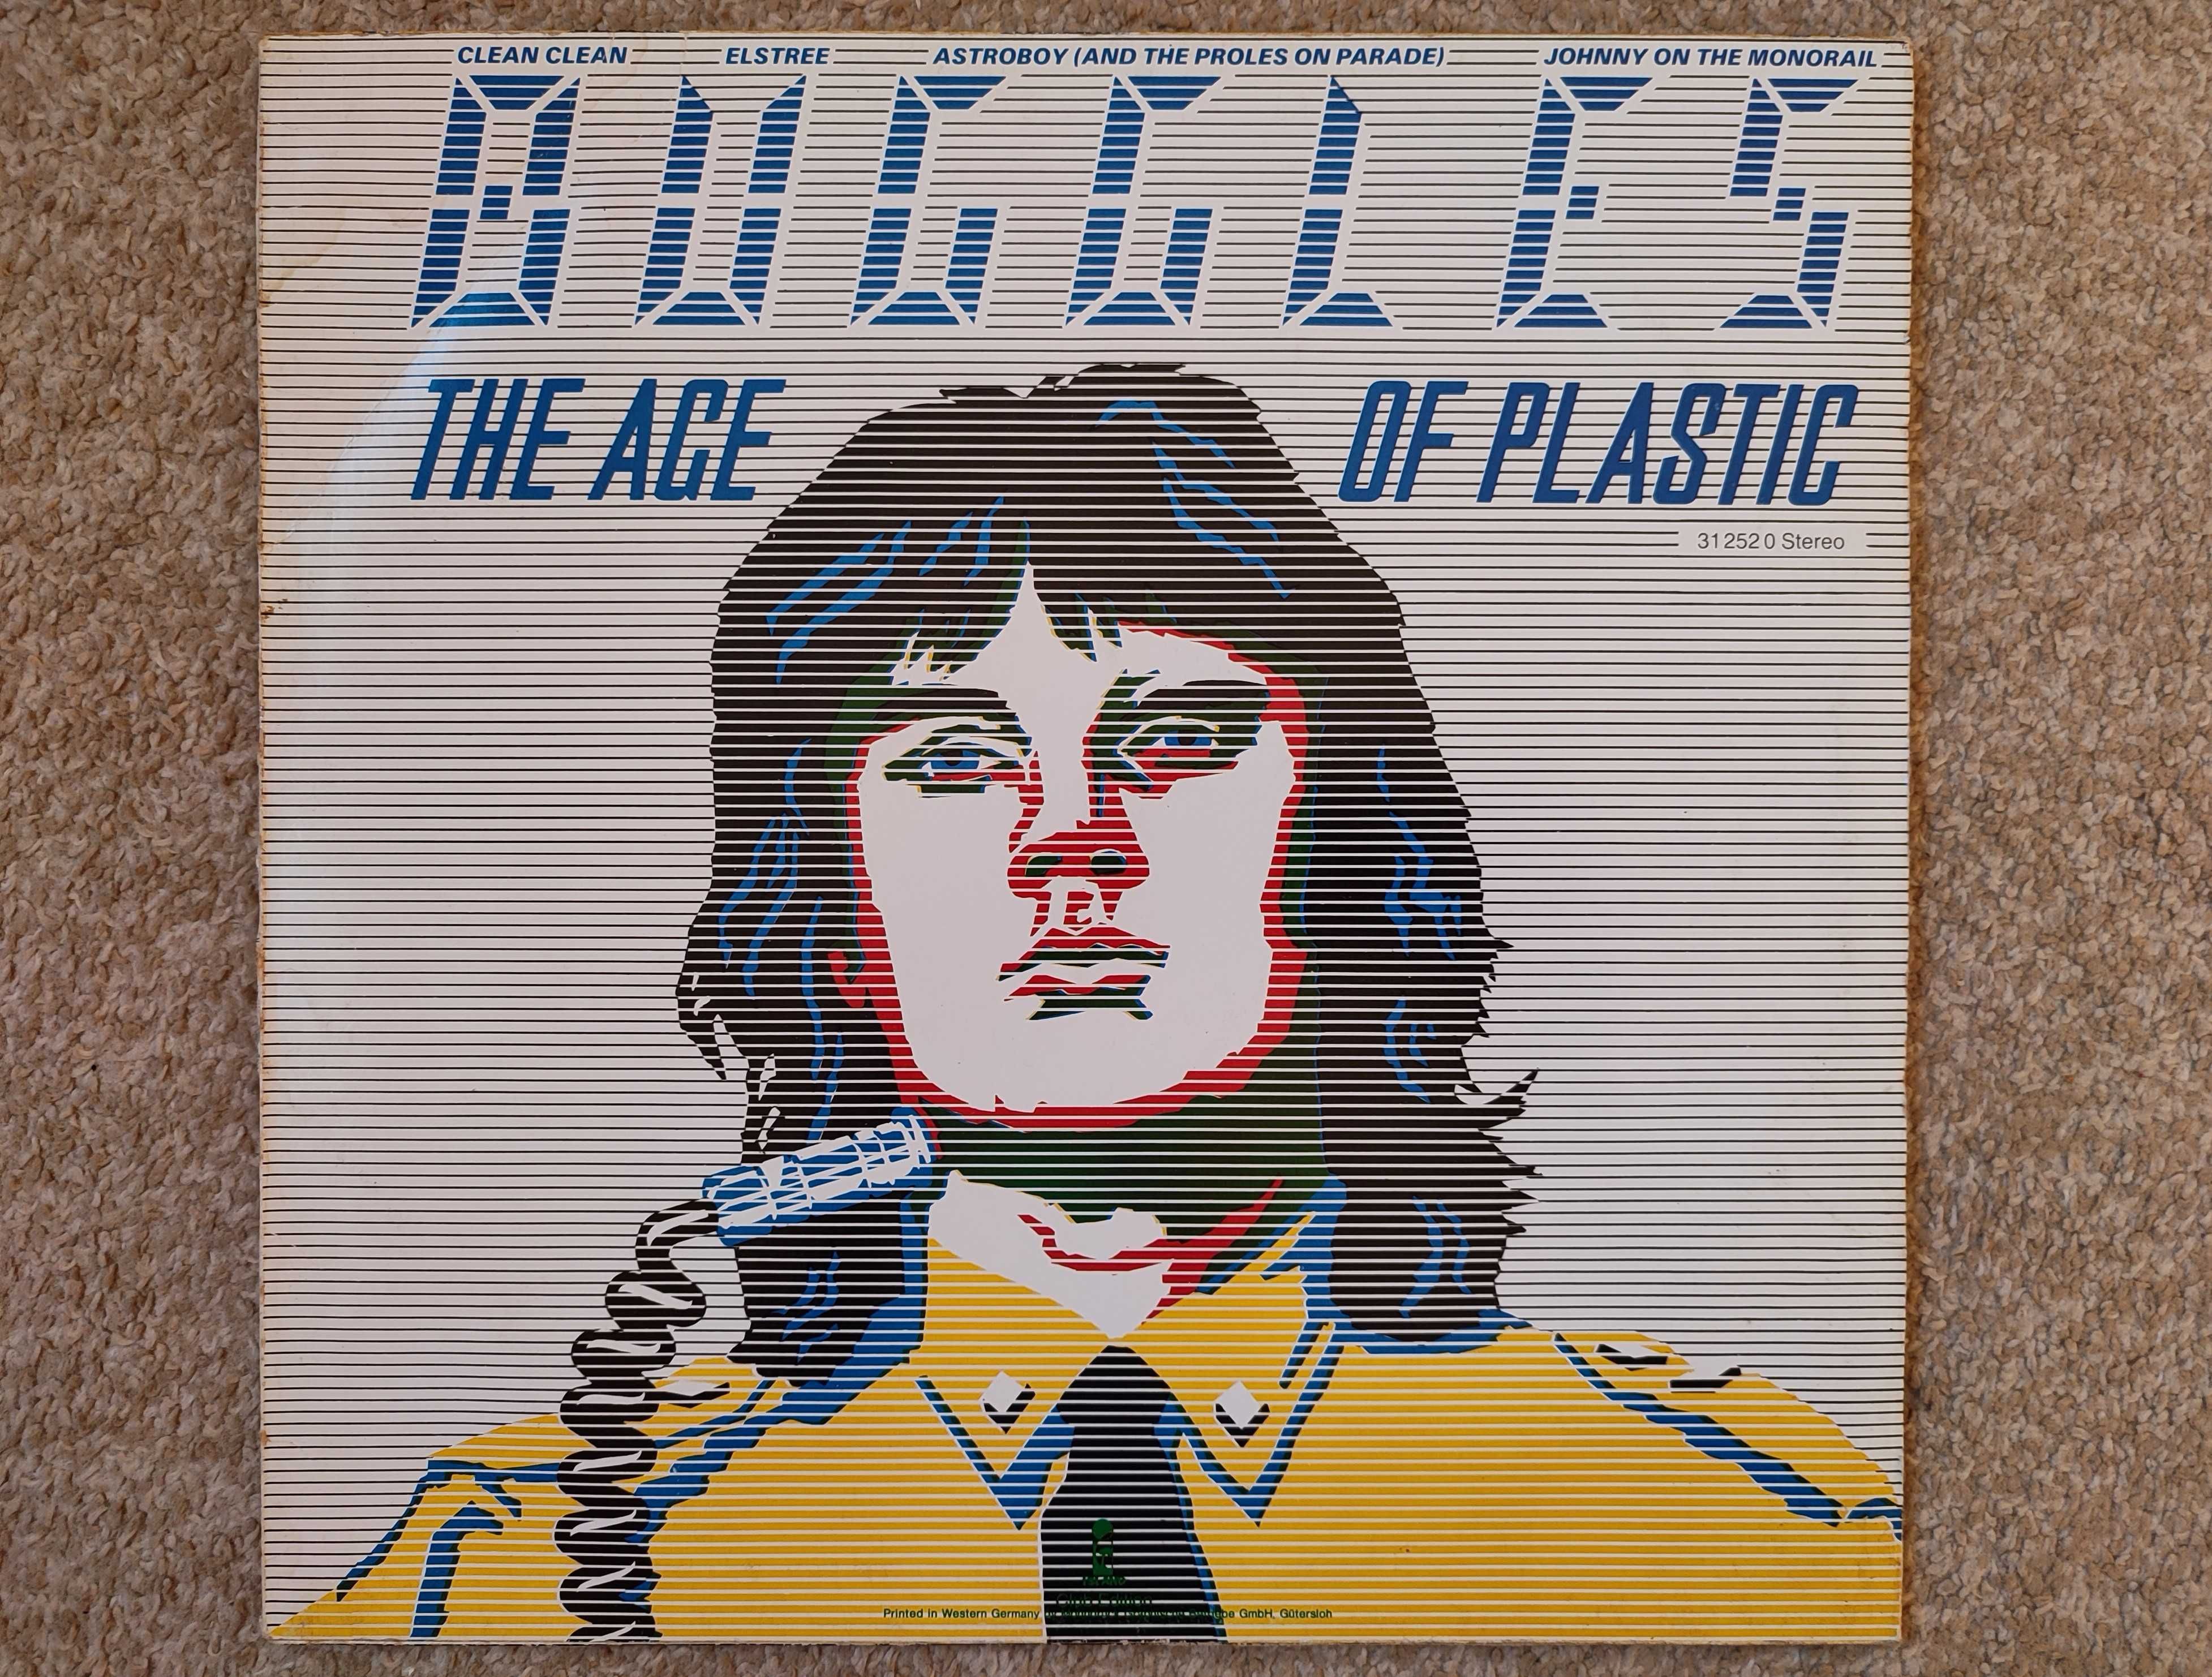 BUGGLES "The Age Of Plastic" T.HORN, G.DOWNES płyta winylowa stan bdb